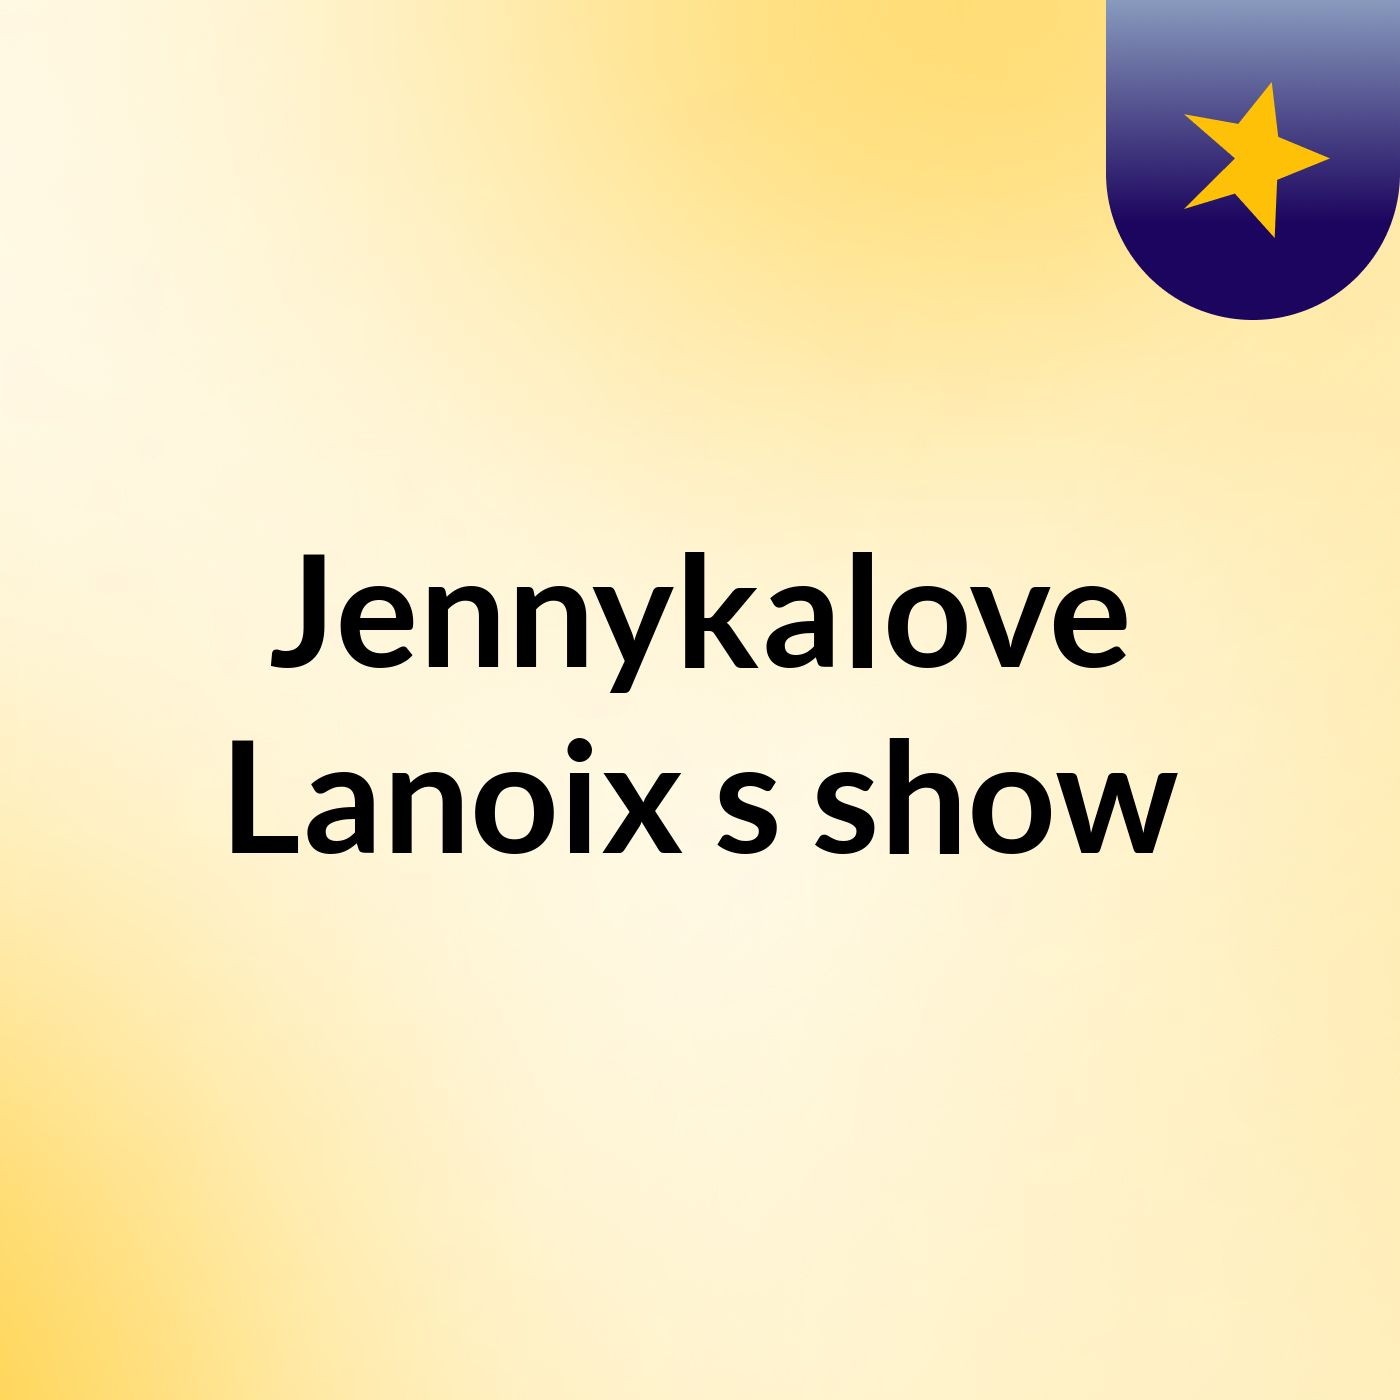 Jennykalove Lanoix's show